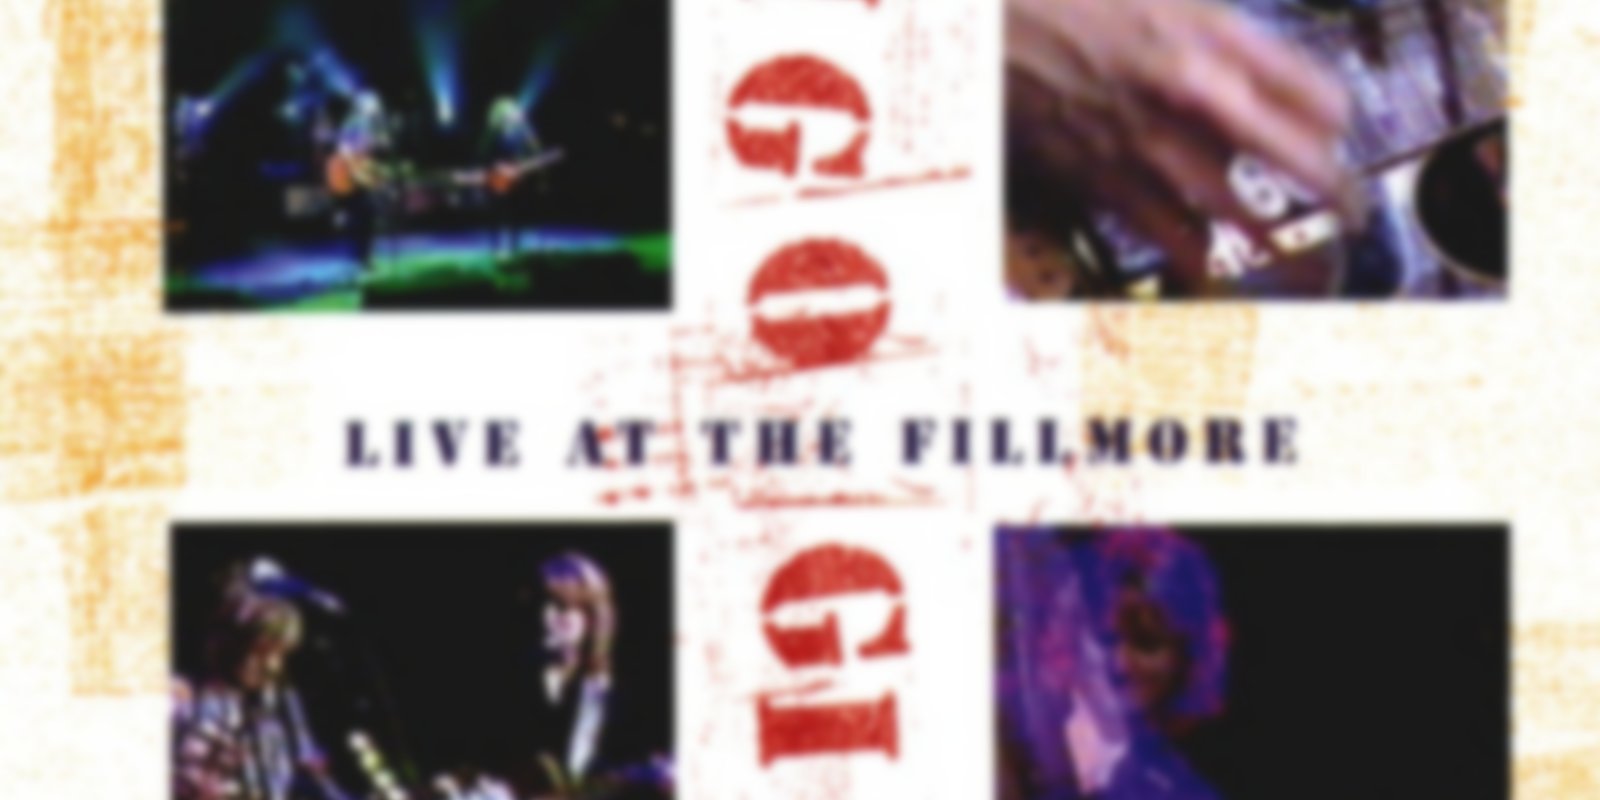 Indigo Girls - Live at the Fillmore